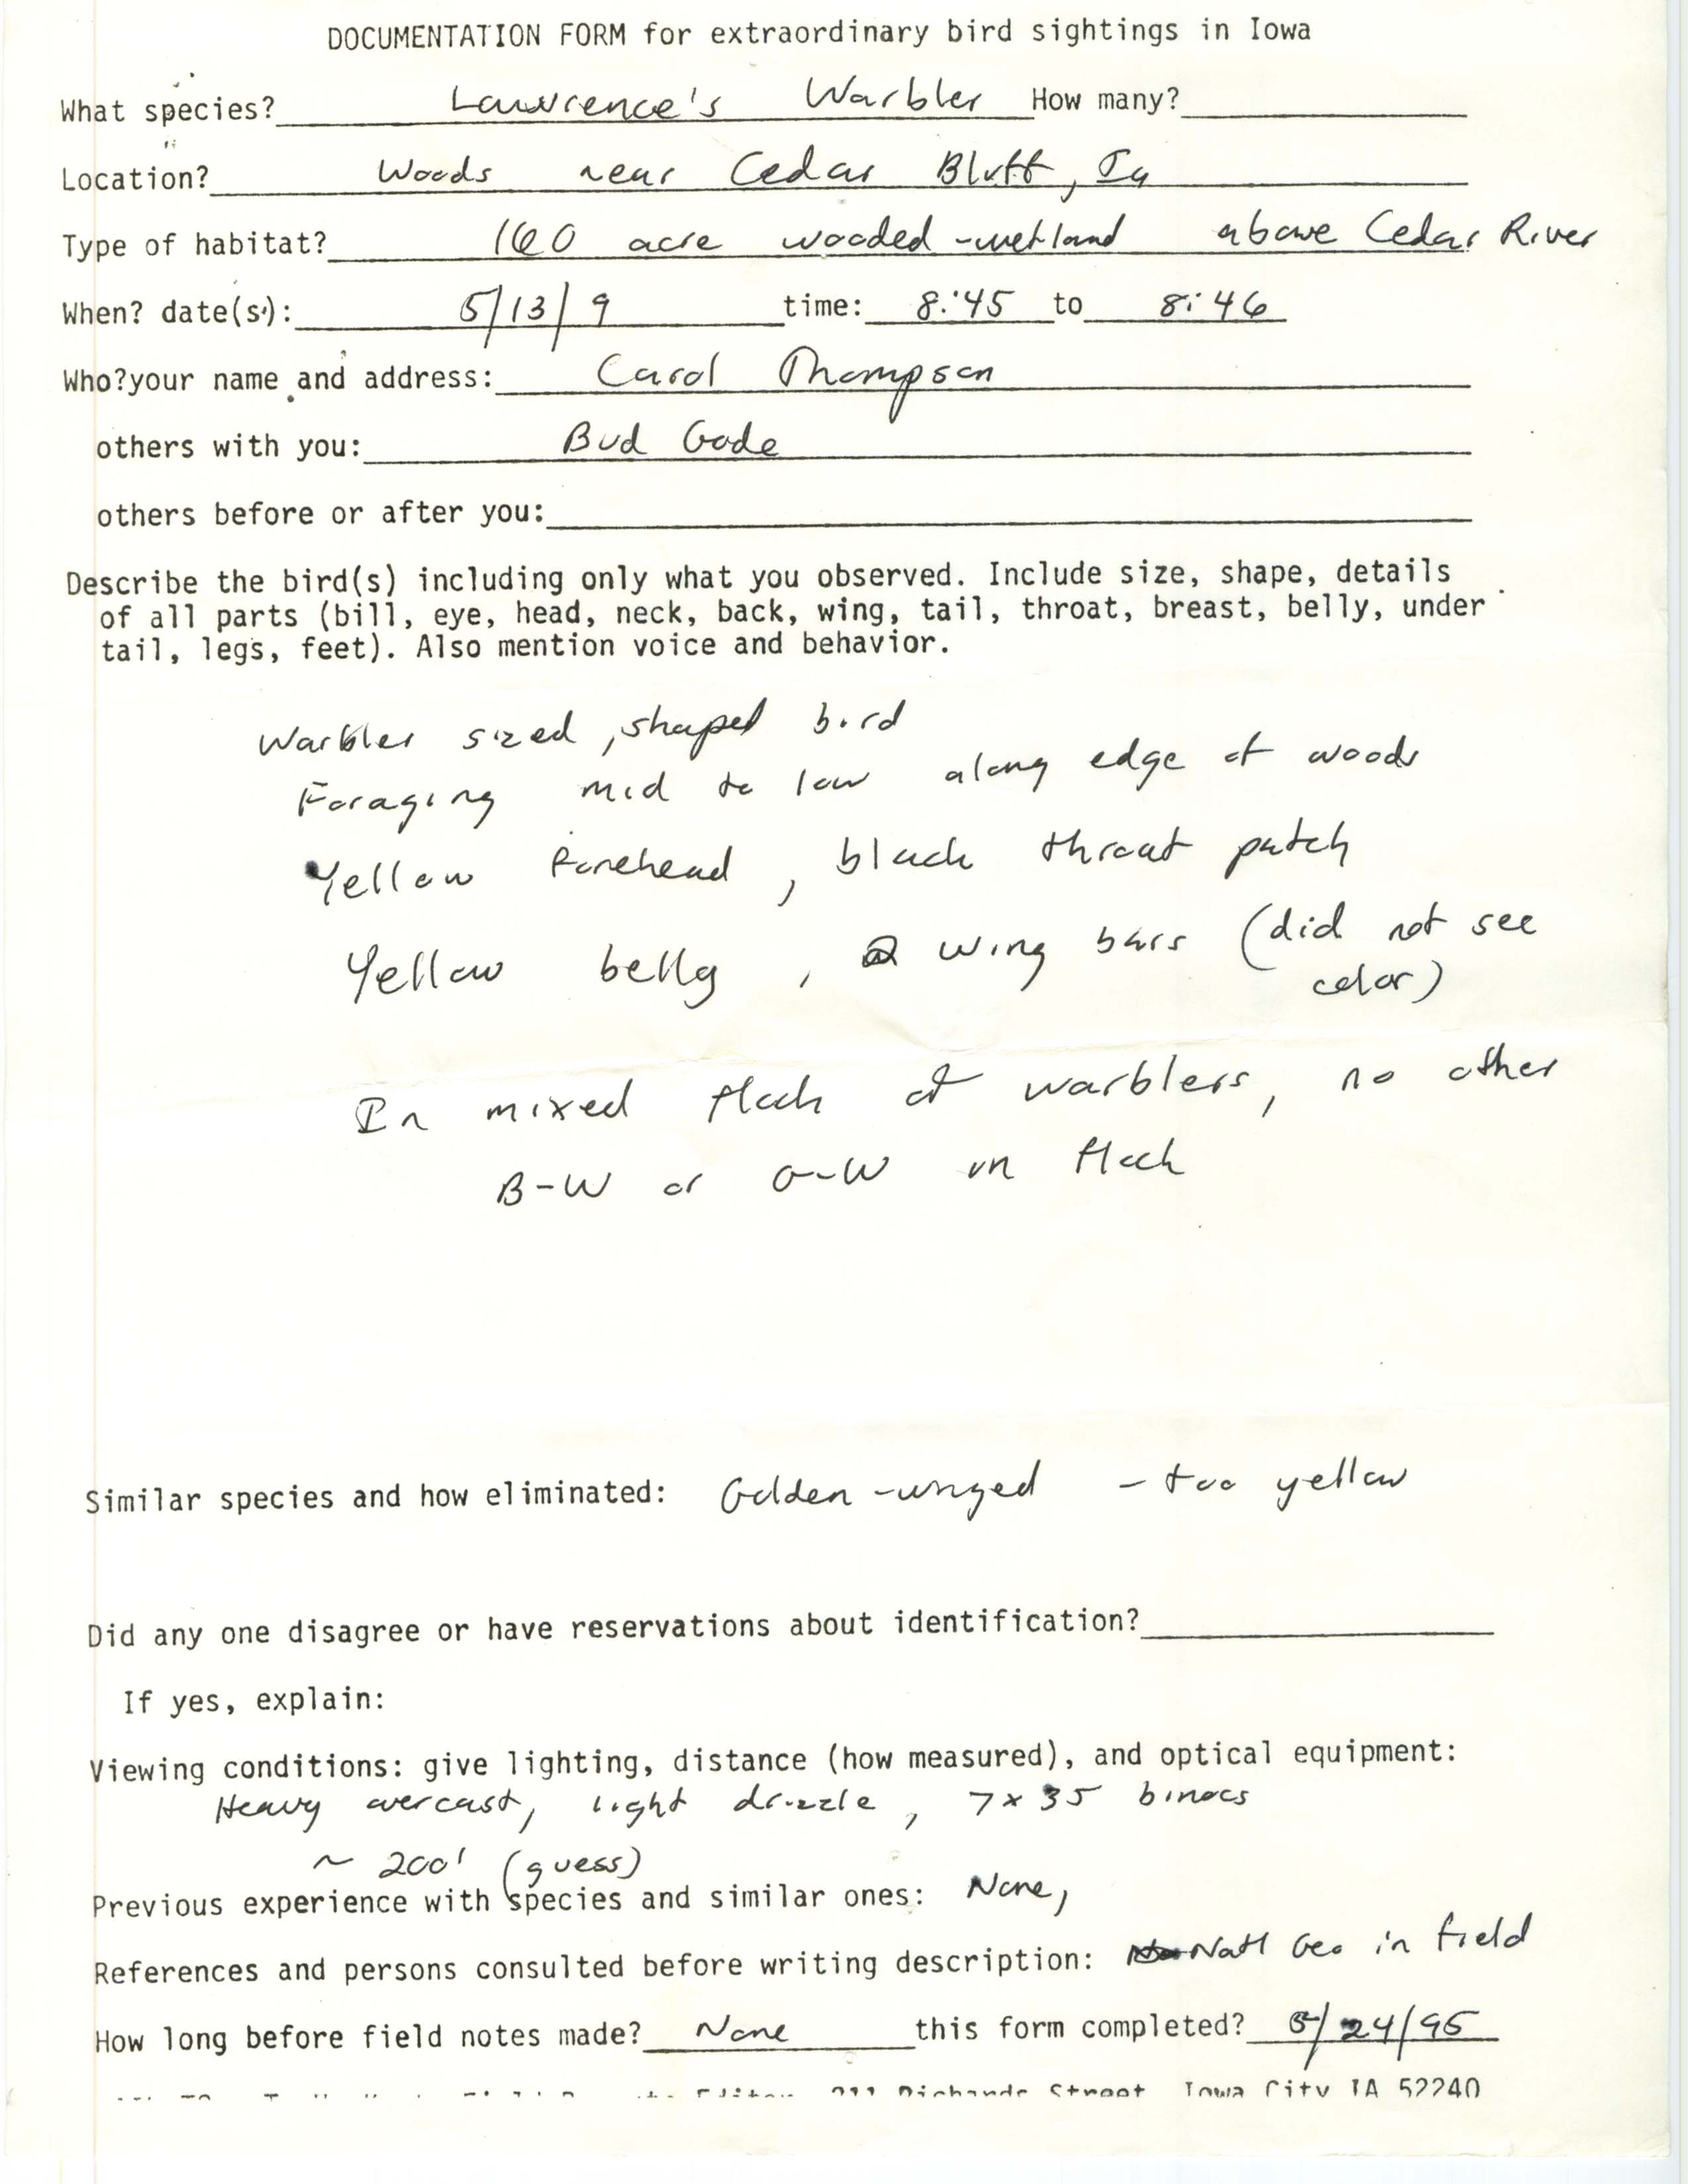 Rare bird documentation form for Lawrence's Warbler near Cedar Bluff, 1995